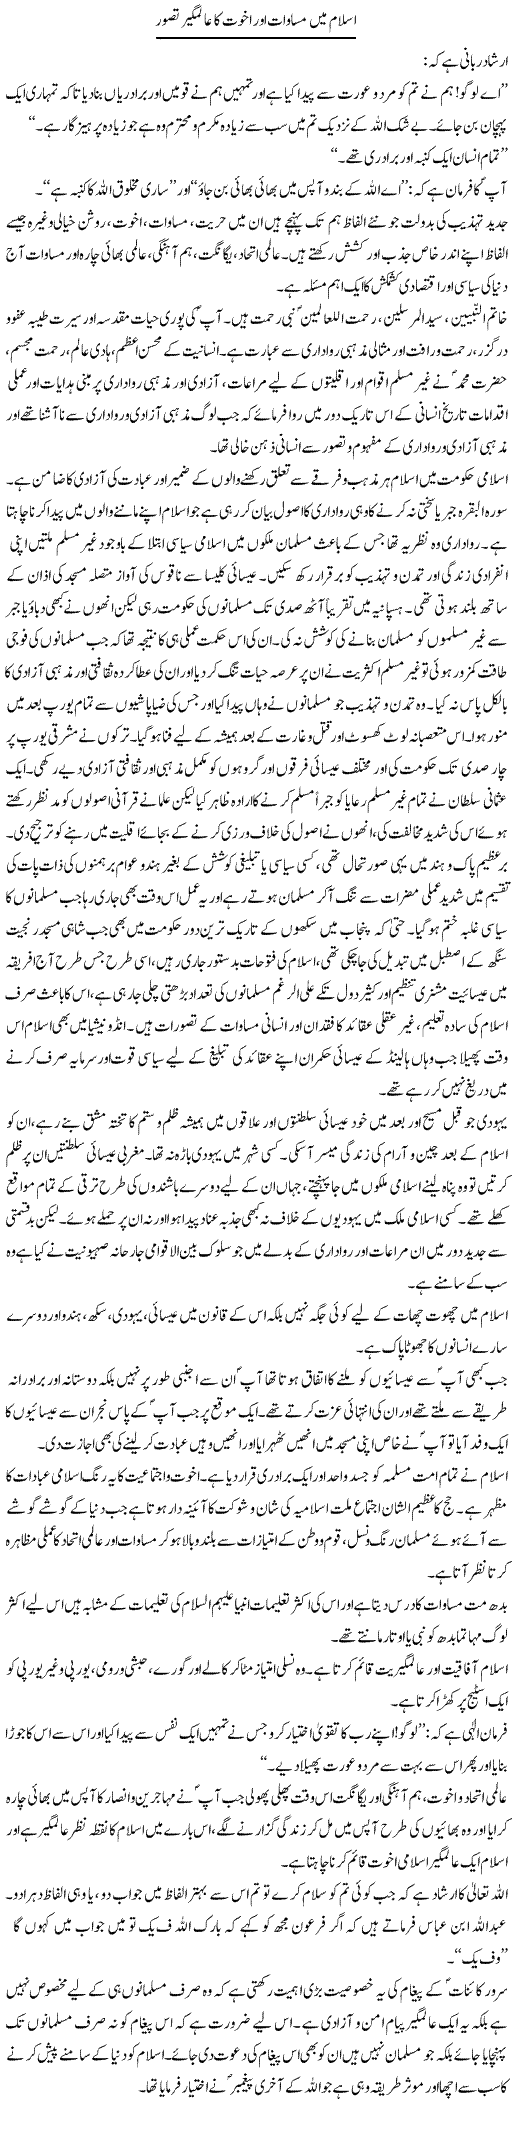 Islam Mein Masawaat Aur Akhuwat Ka Alamgir Tasawur | Dr. Muhammad Tayyab Khan Singhanvi | Daily Urdu Columns